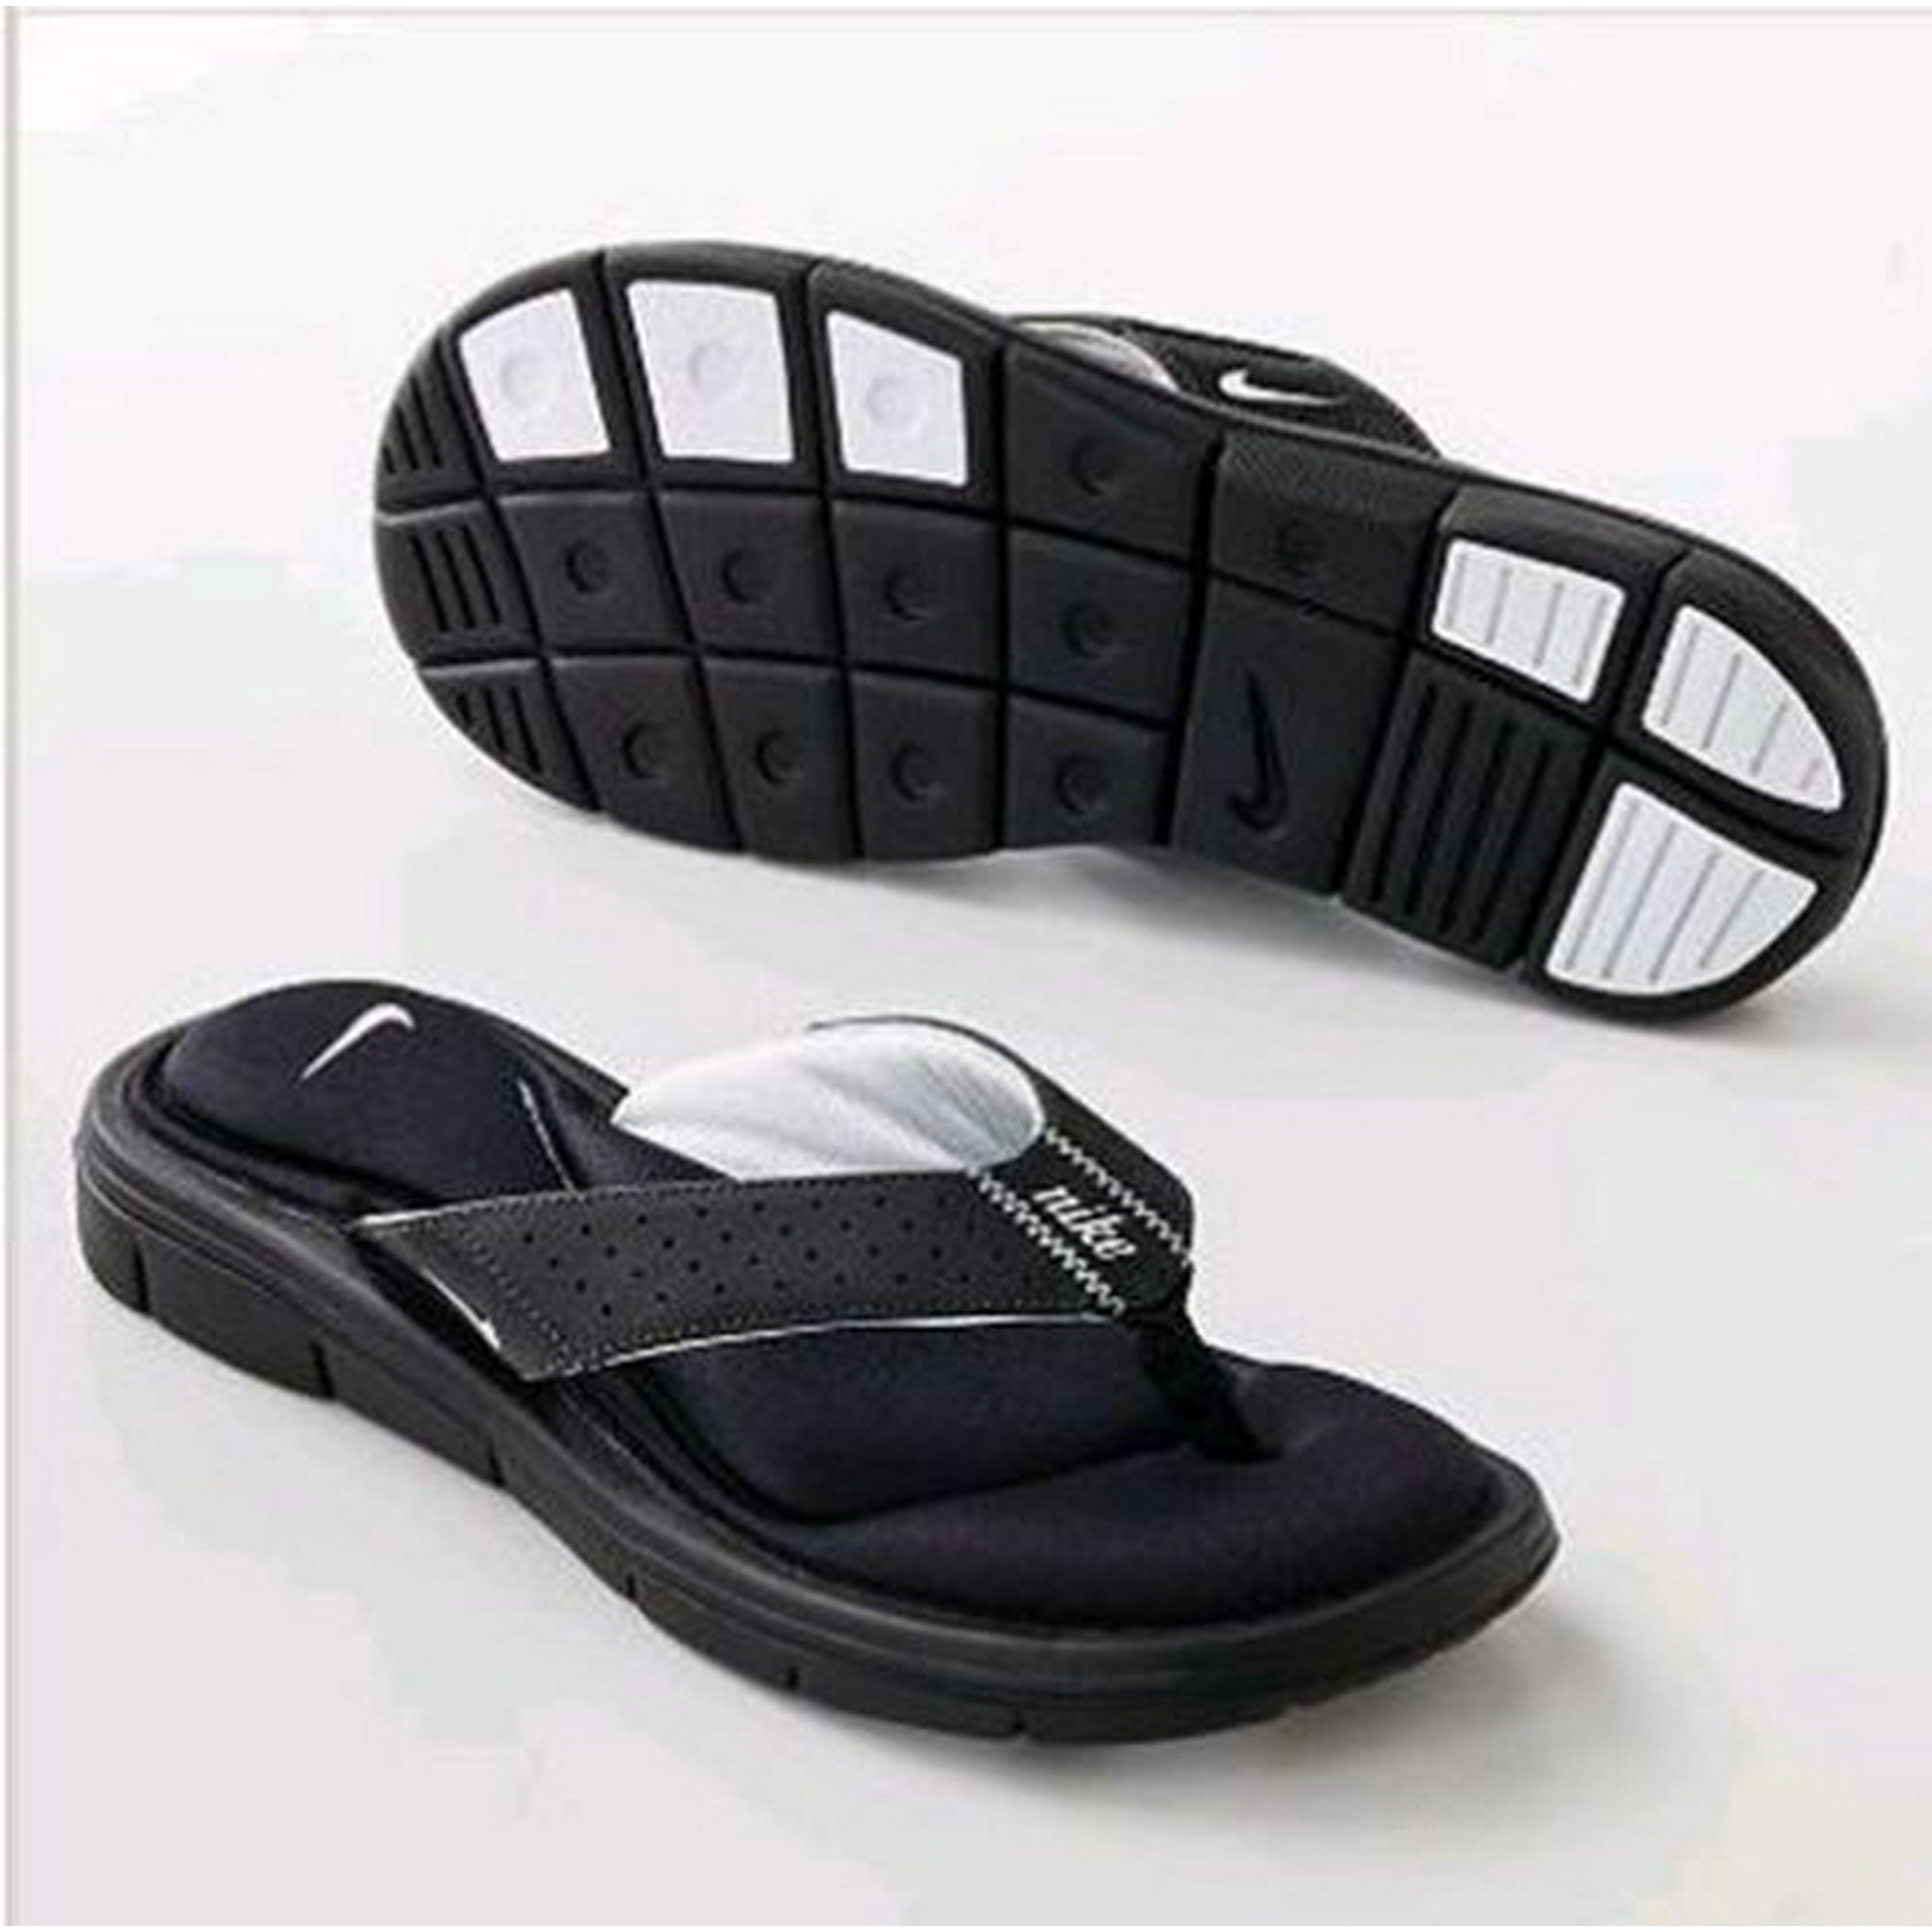 Nike Women's Black/White Comfort Thong Sandal Flip Flops Size - Walmart.com